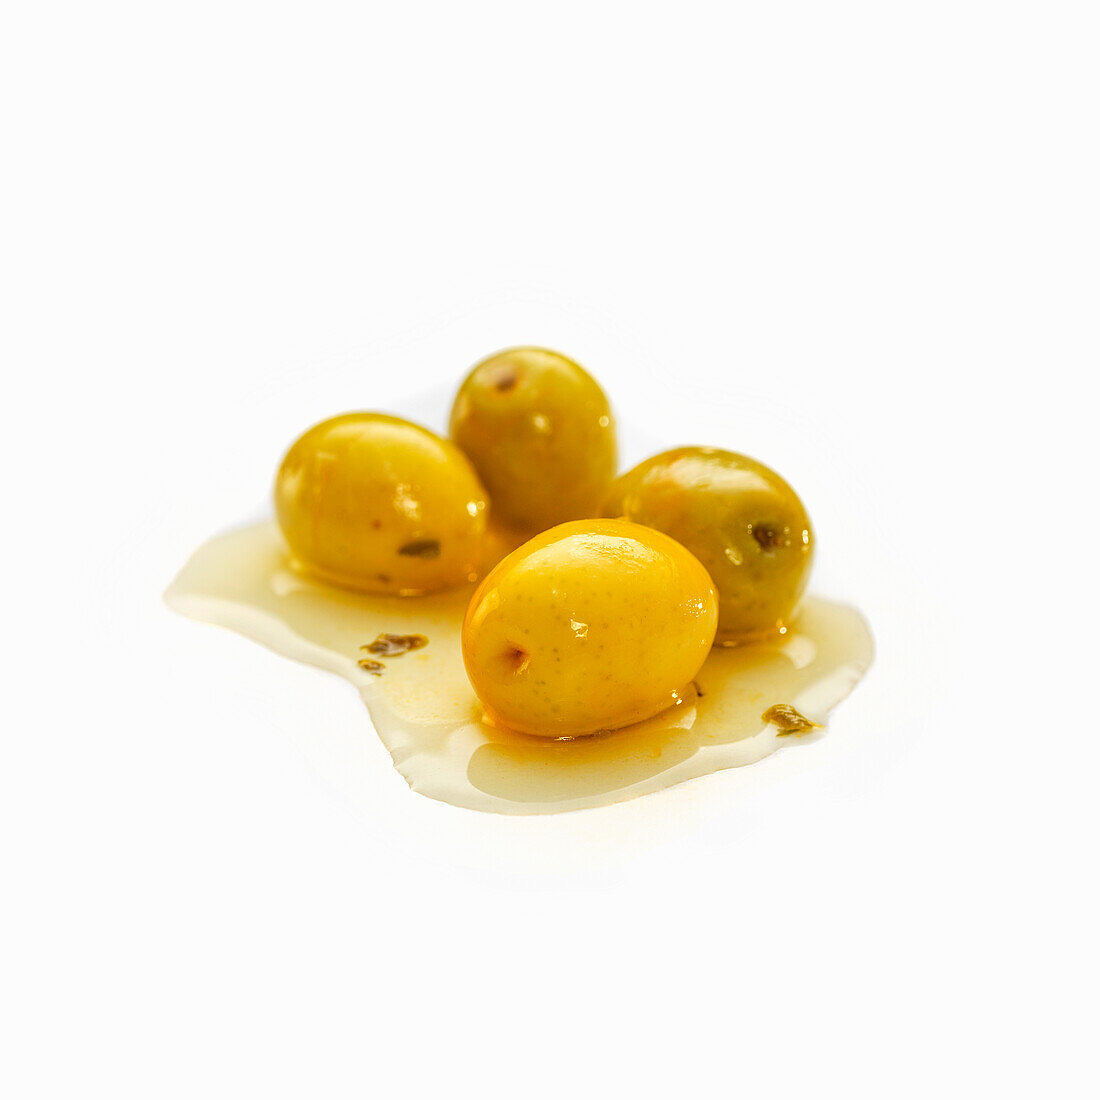 Spanish pickled olives